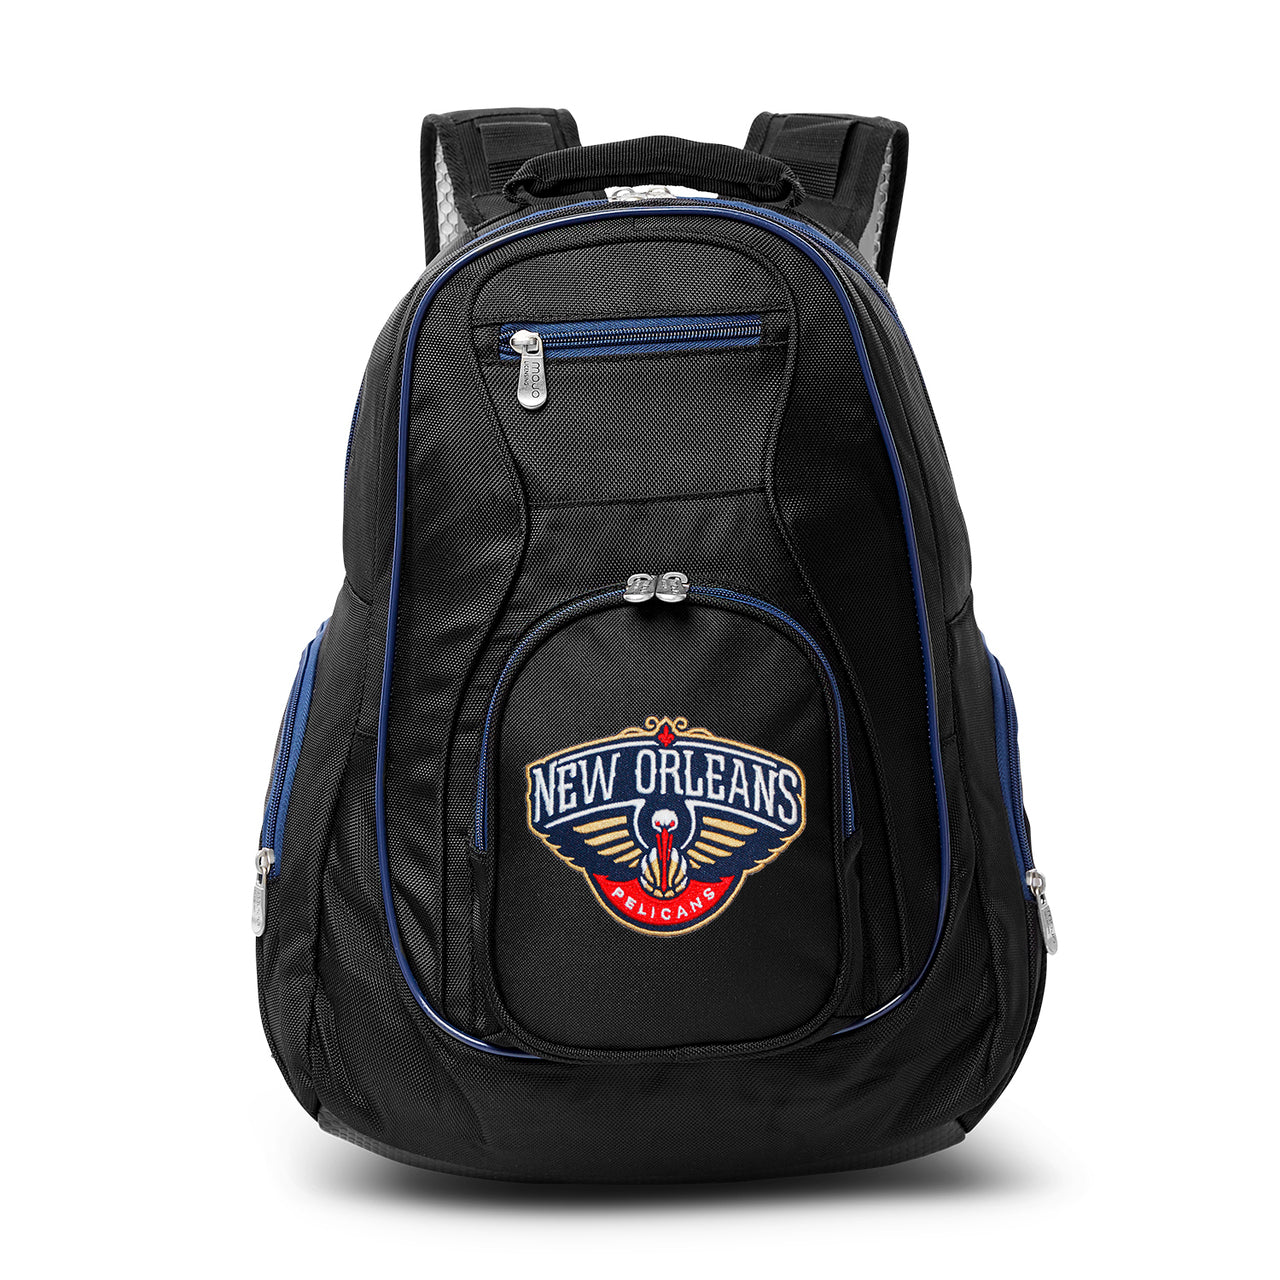 Pelicans Backpack | New Orleans Pelicans Laptop Backpack